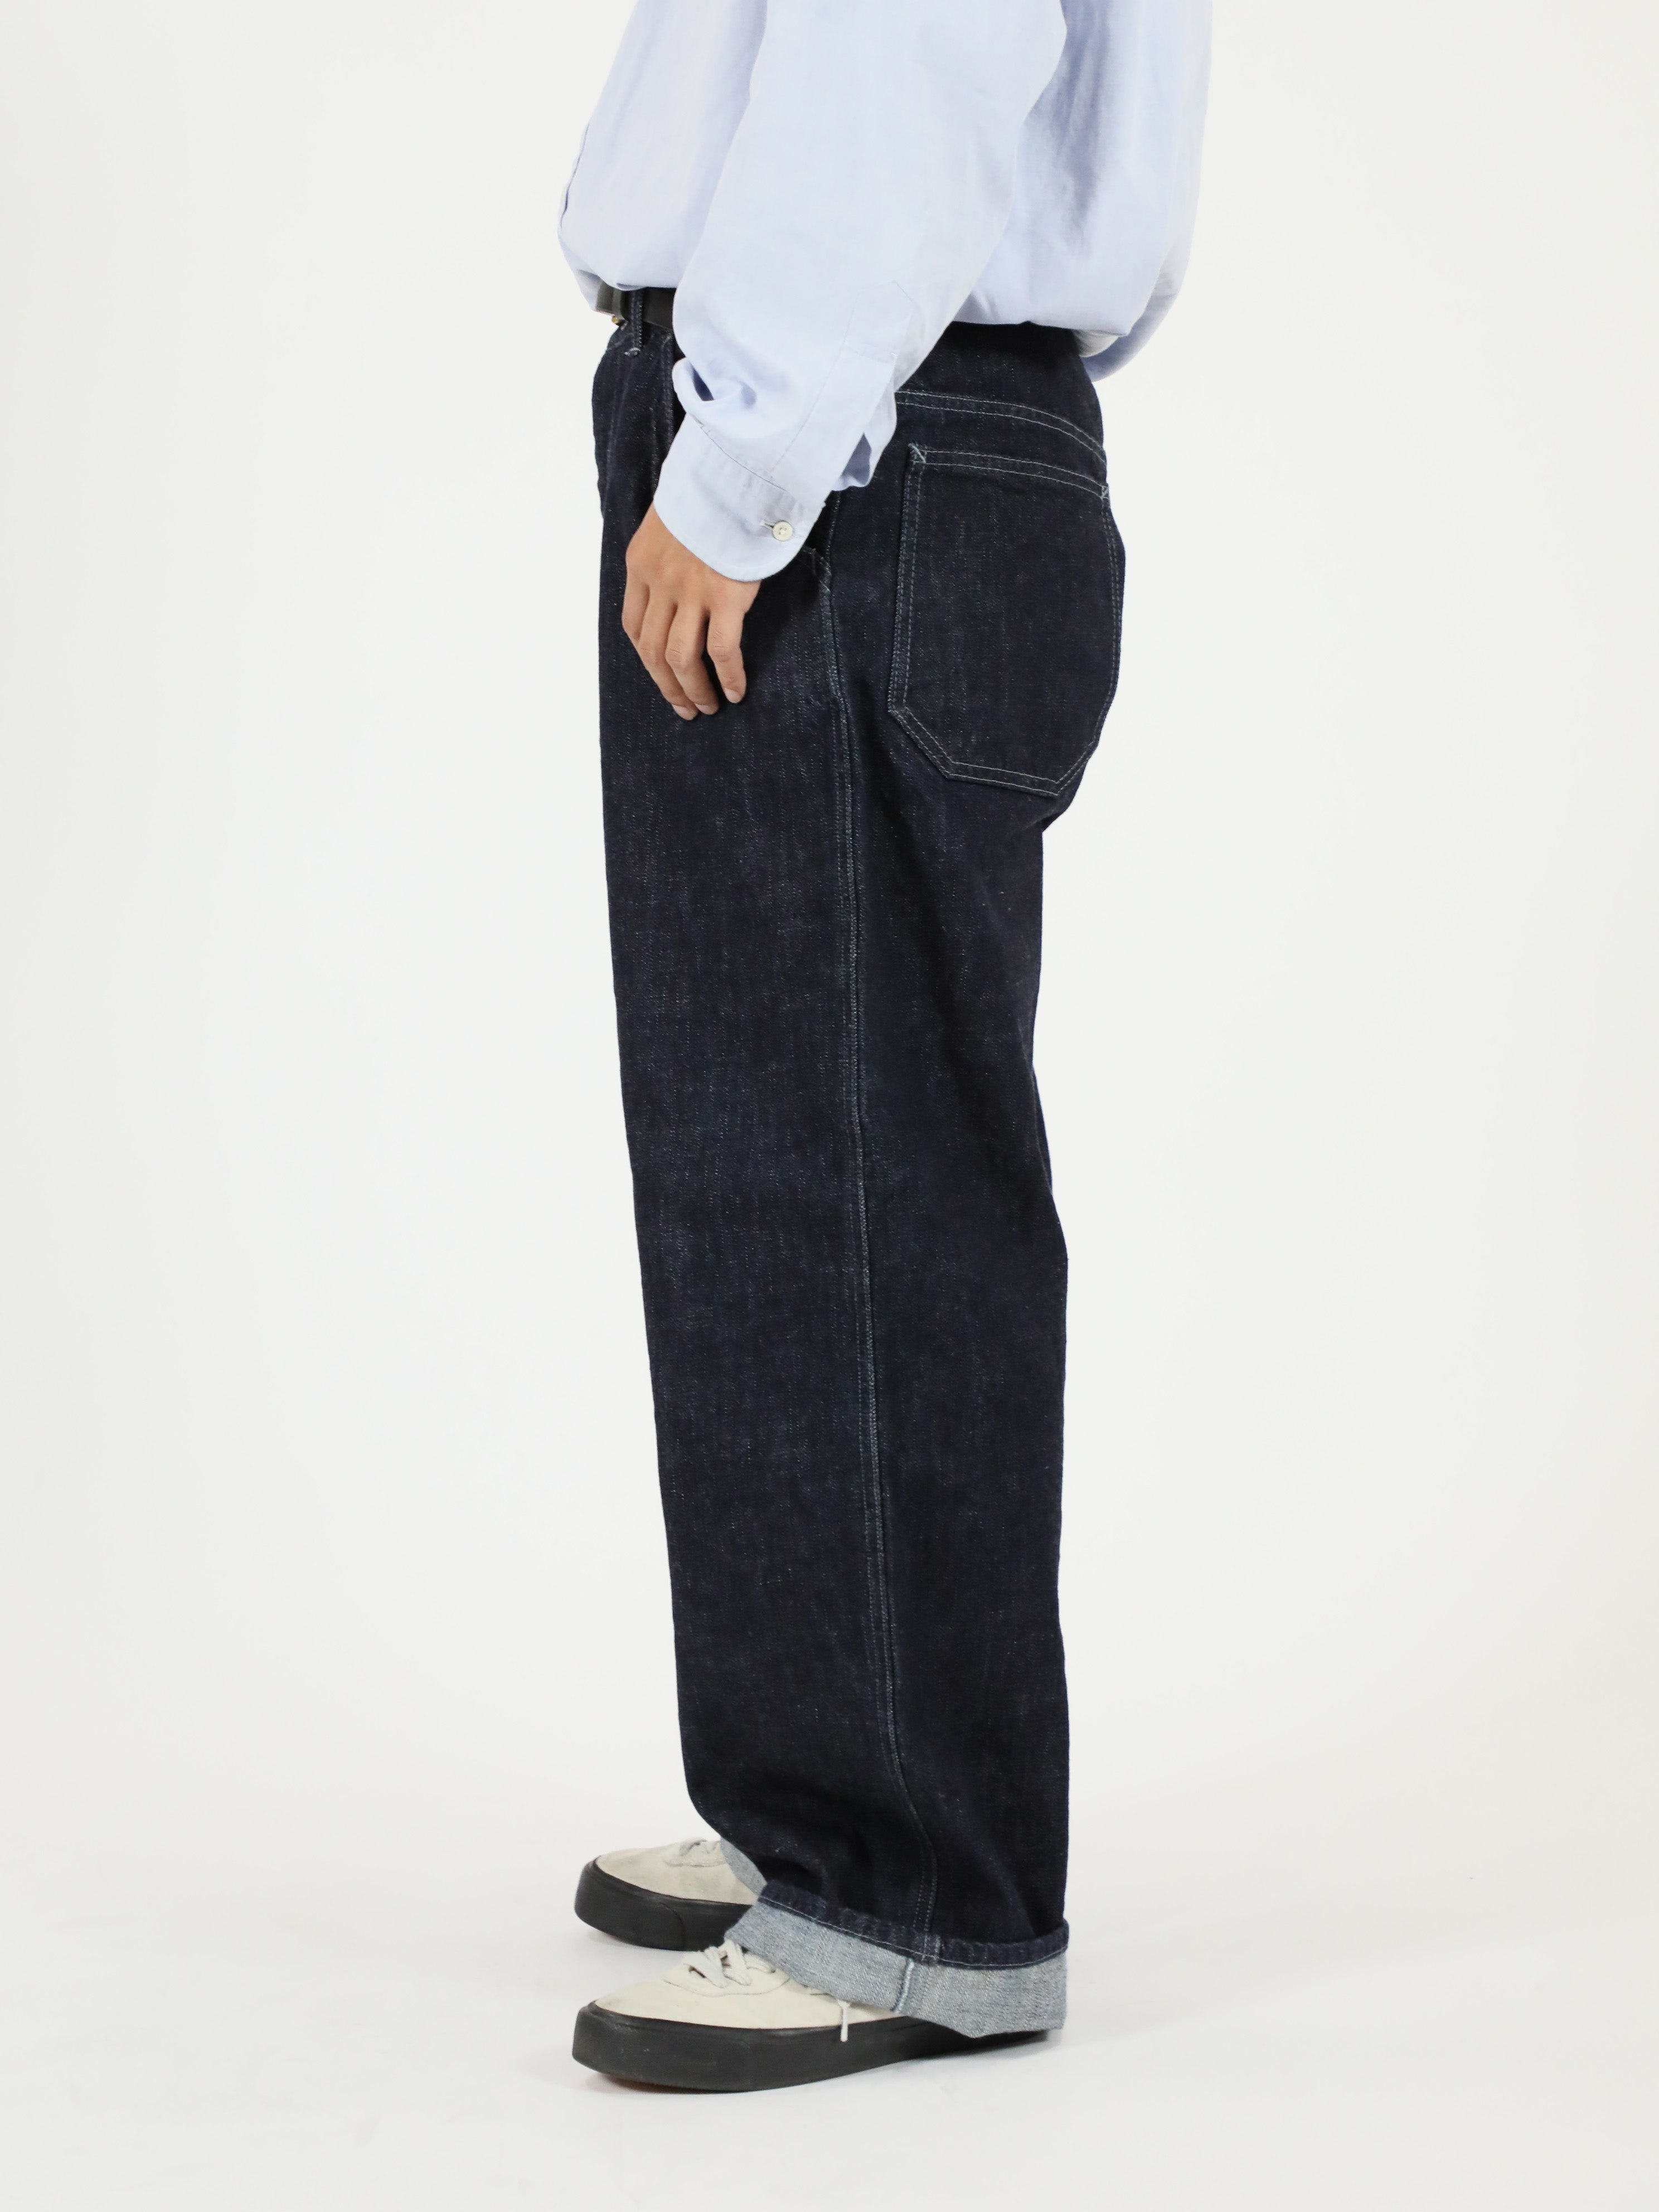 13.5oz Men's Crunch Denim Wide-Leg Jeans